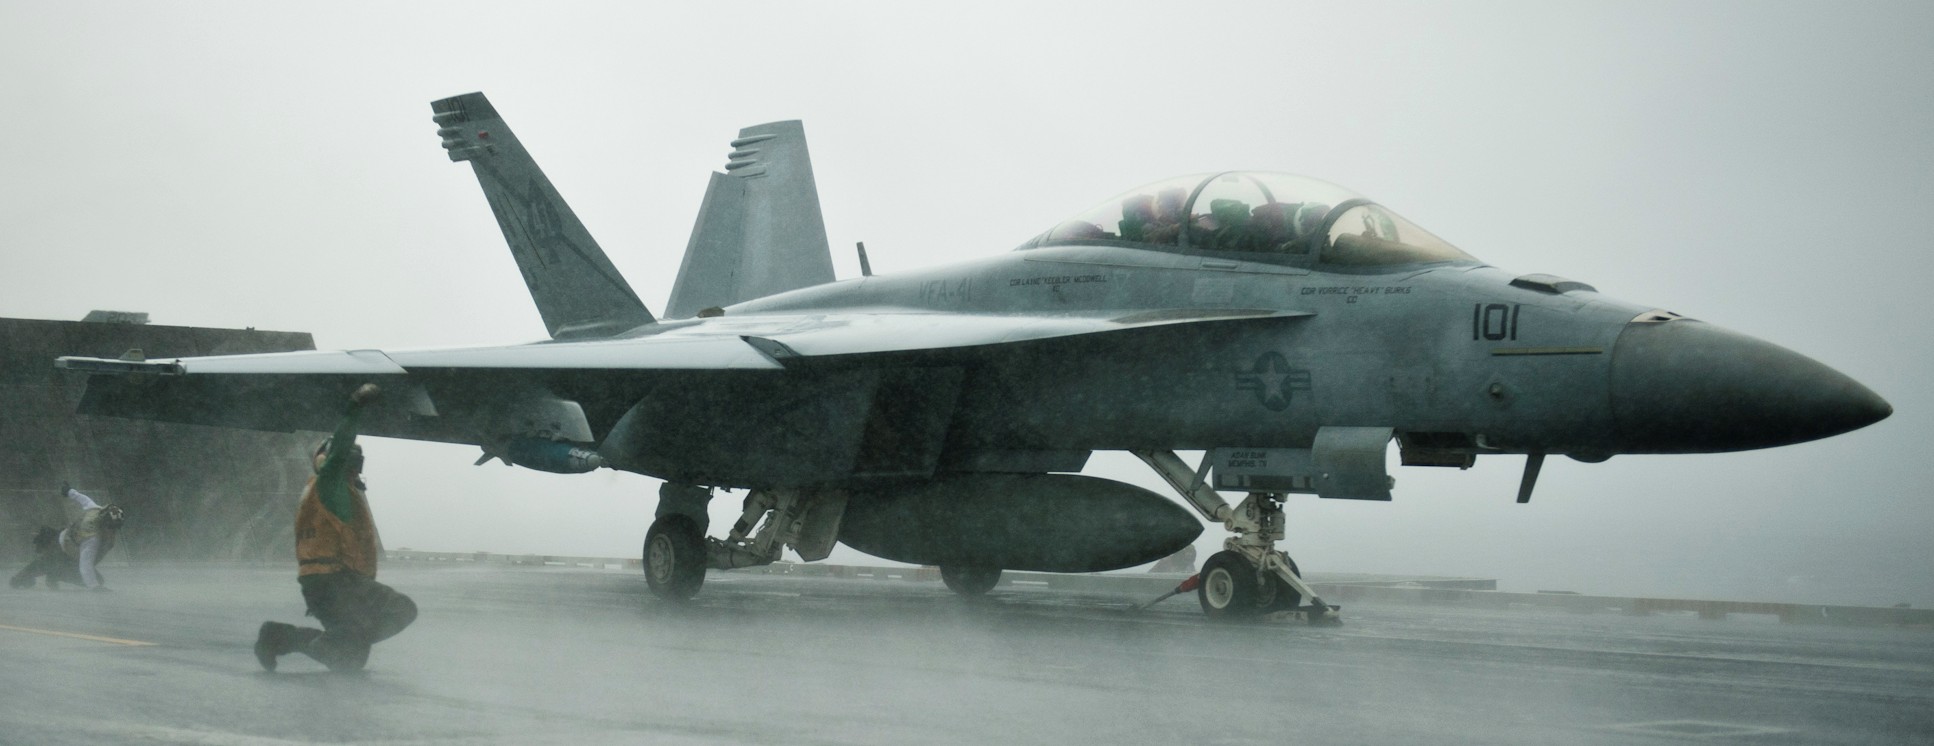 vfa-41 black aces strike fighter squadron f/a-18f super hornet cvw-9 cvn-70 uss john c. stennis us navy 103p